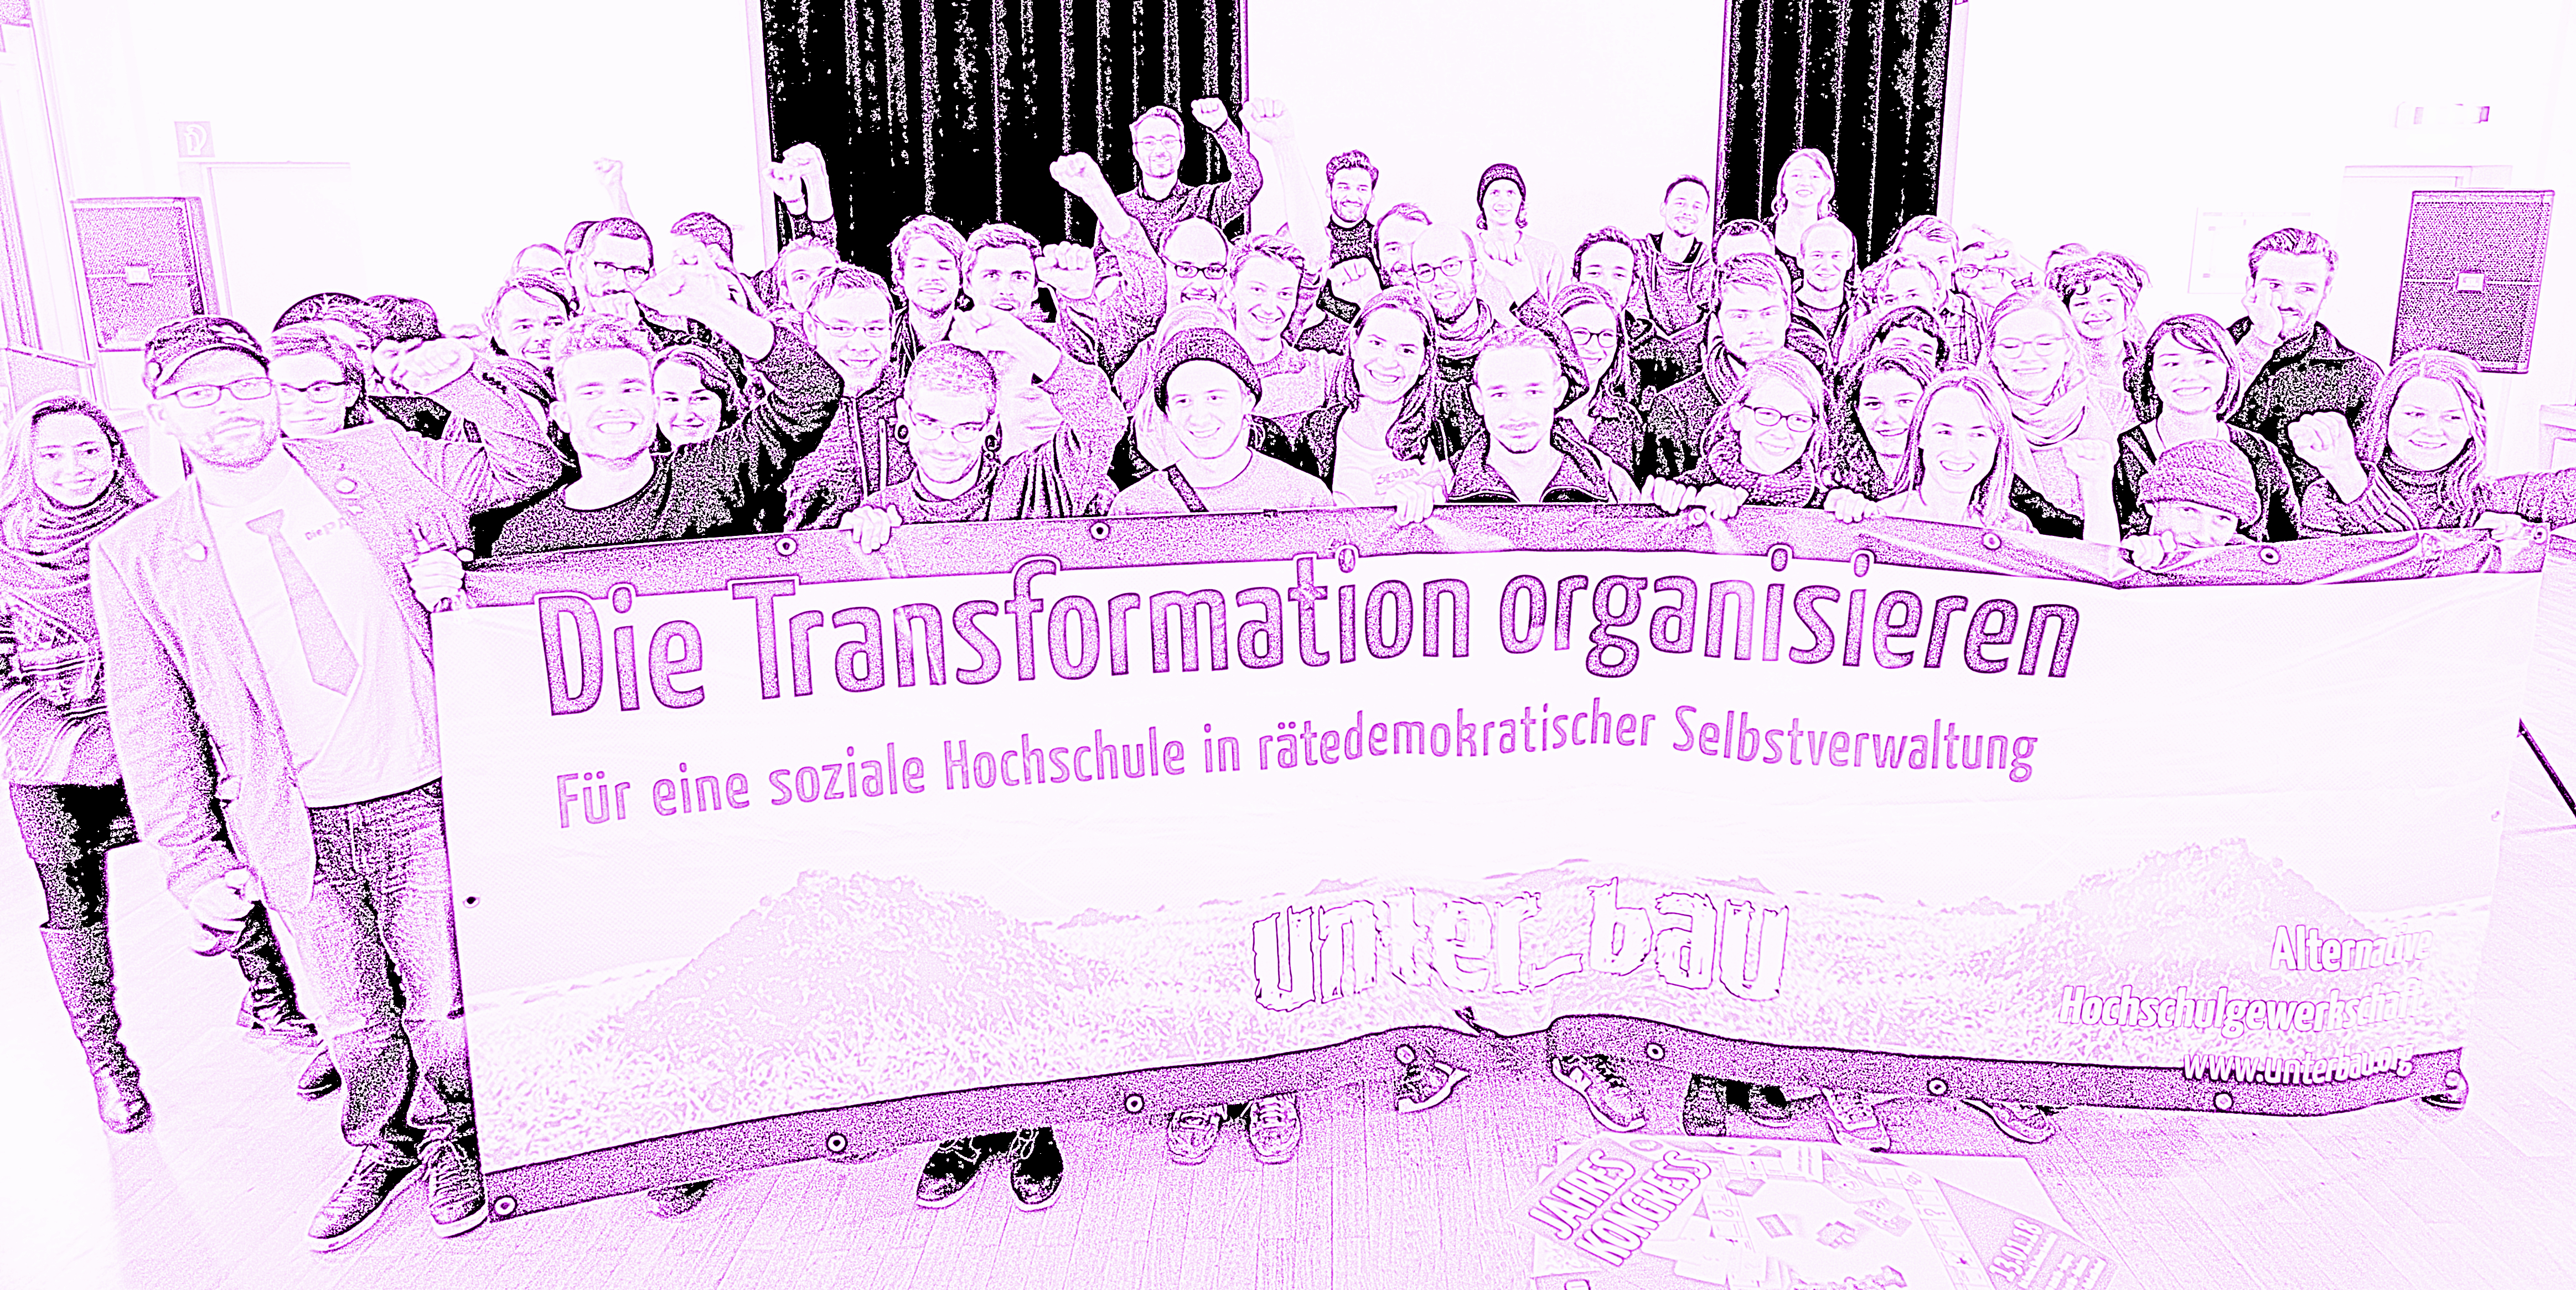 Solidaritätserklärung mit dem Arbeitskampf der Studentischen Hilfskräfte (SHKs) in Berlin